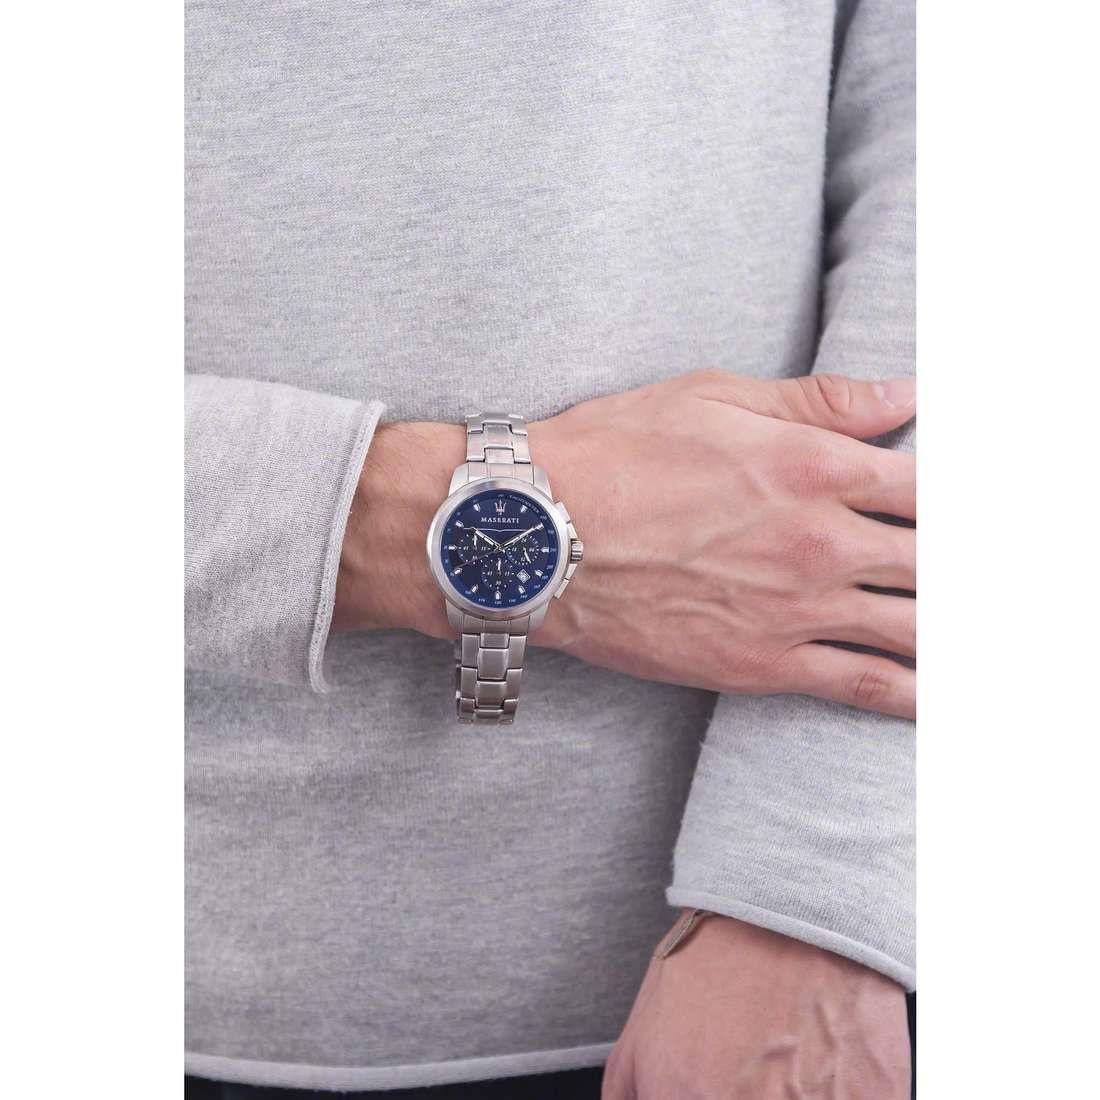 Maserati R8873621002 Successo Chronograph Men's Watch - Watch Home™